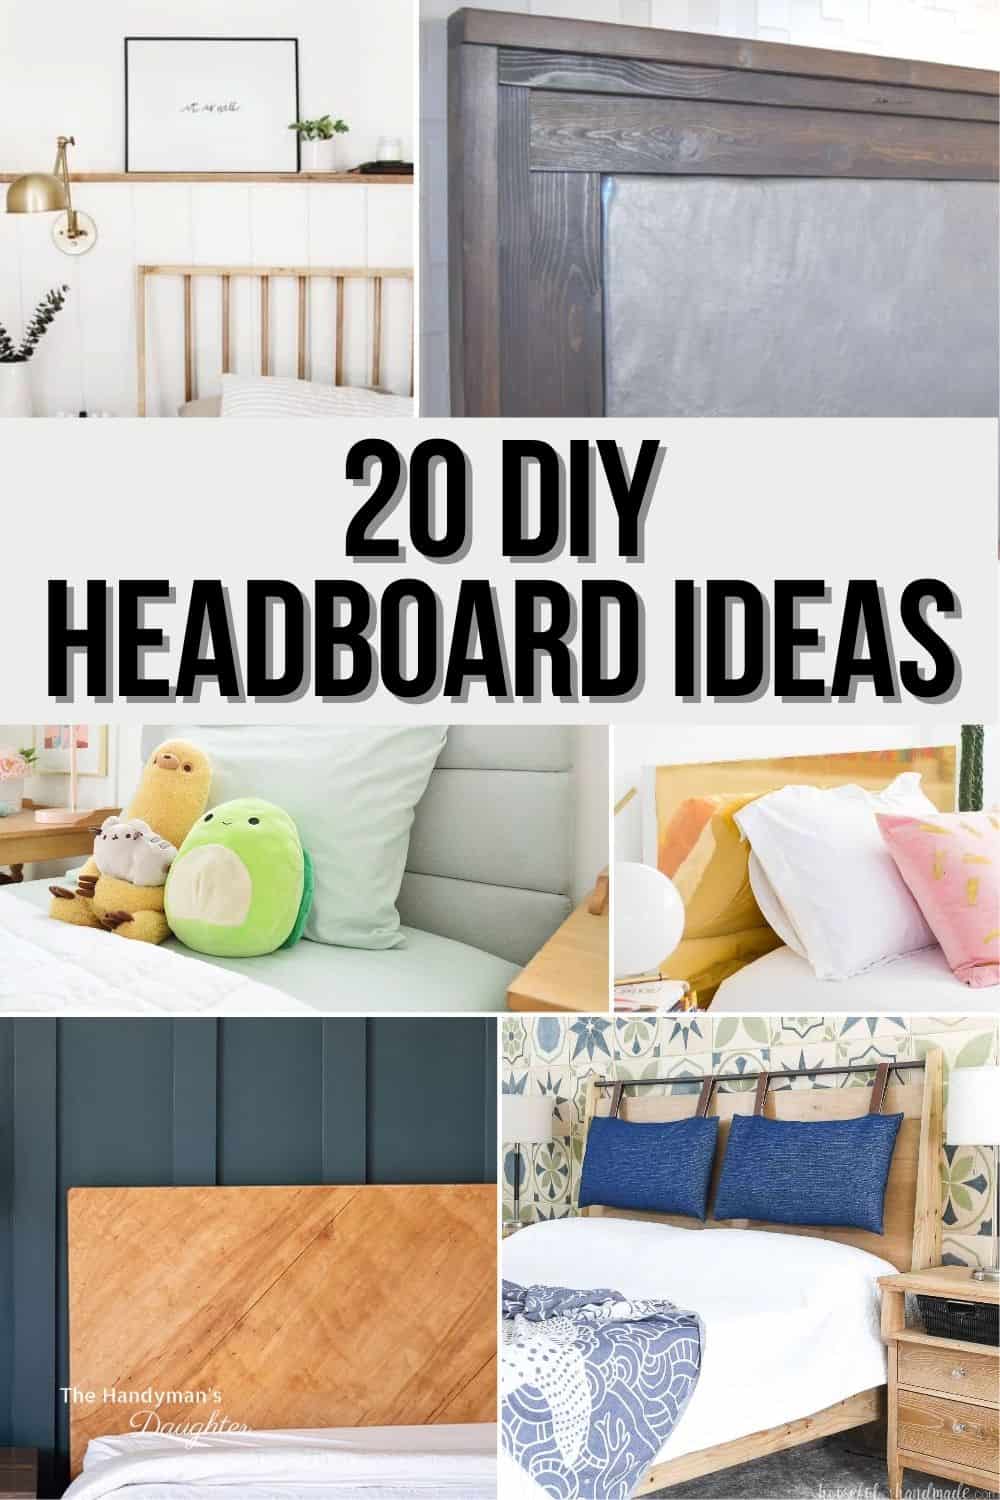 DIY headboard ideas